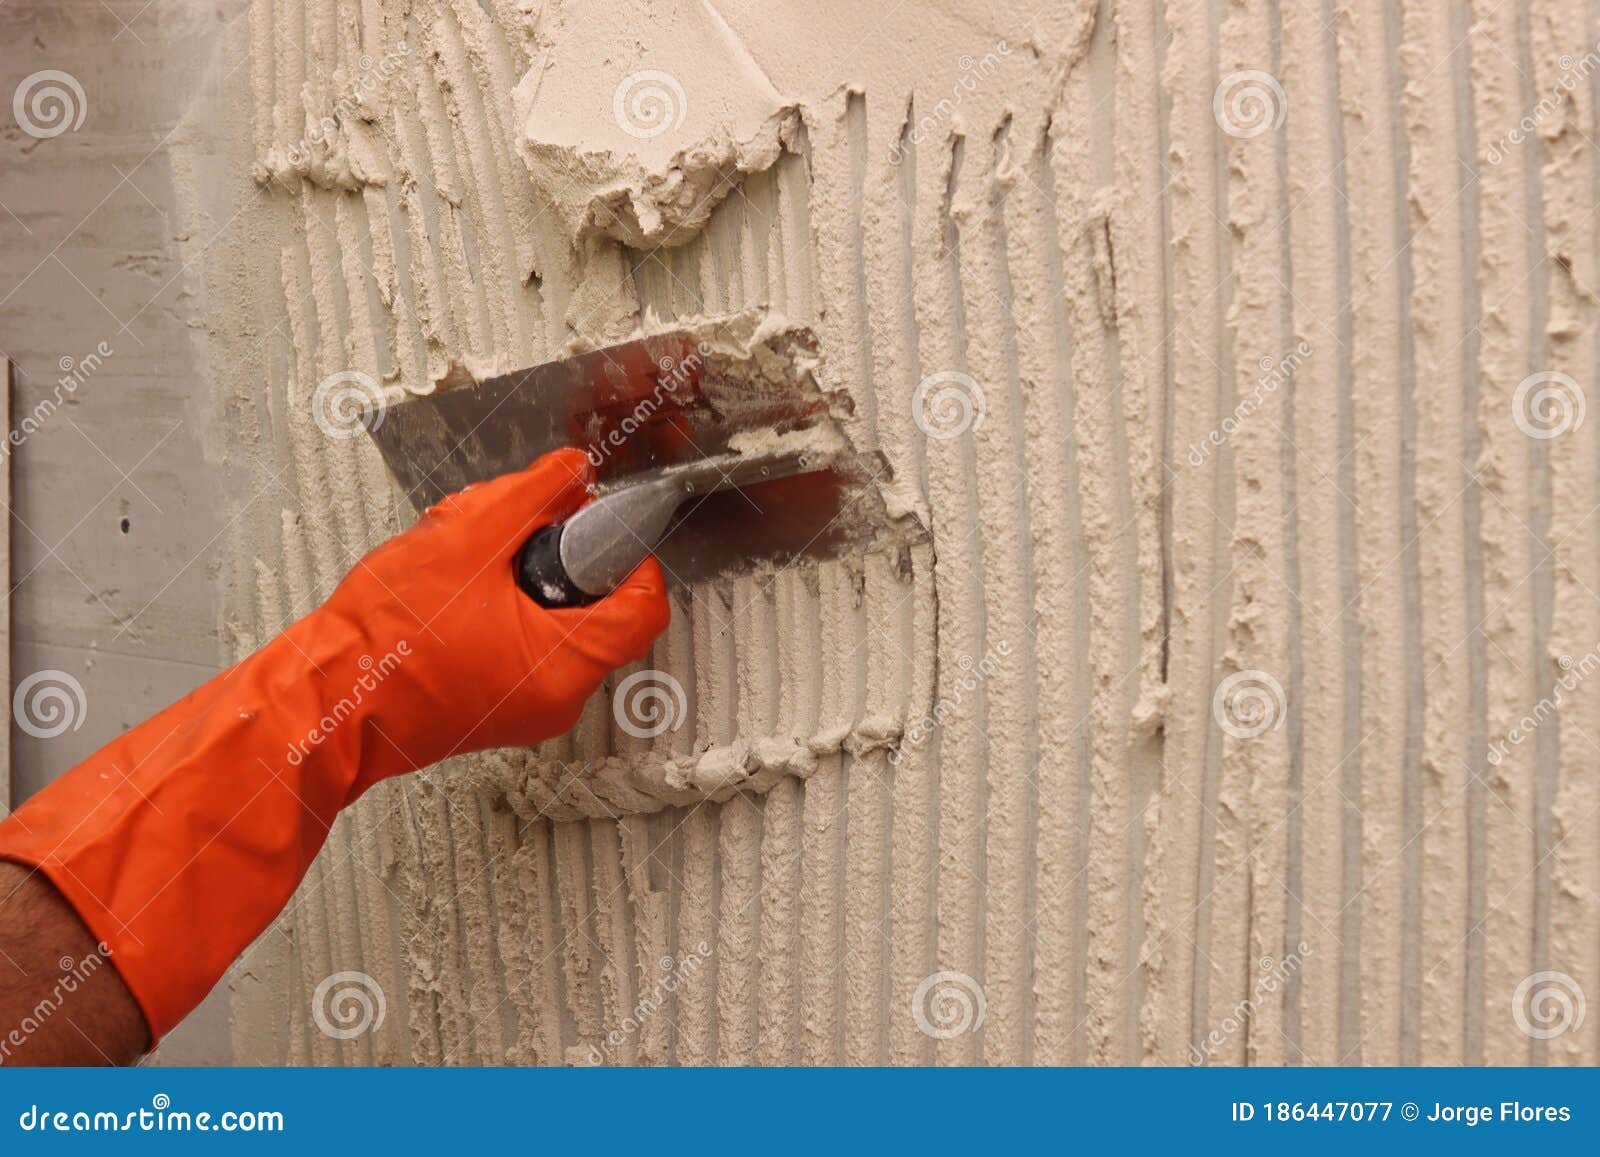 worker applying white thinset mortar